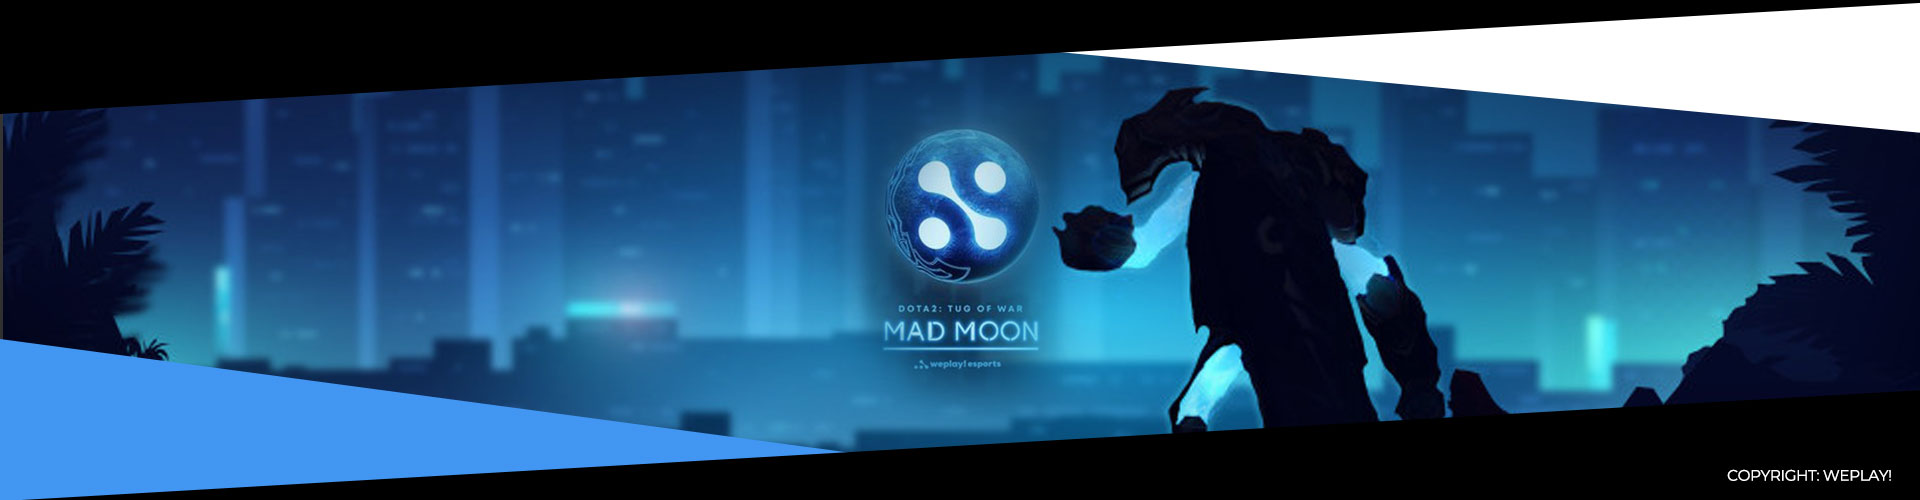 Dota 2 - WePlay! Tug of War: Mad Moon 2020